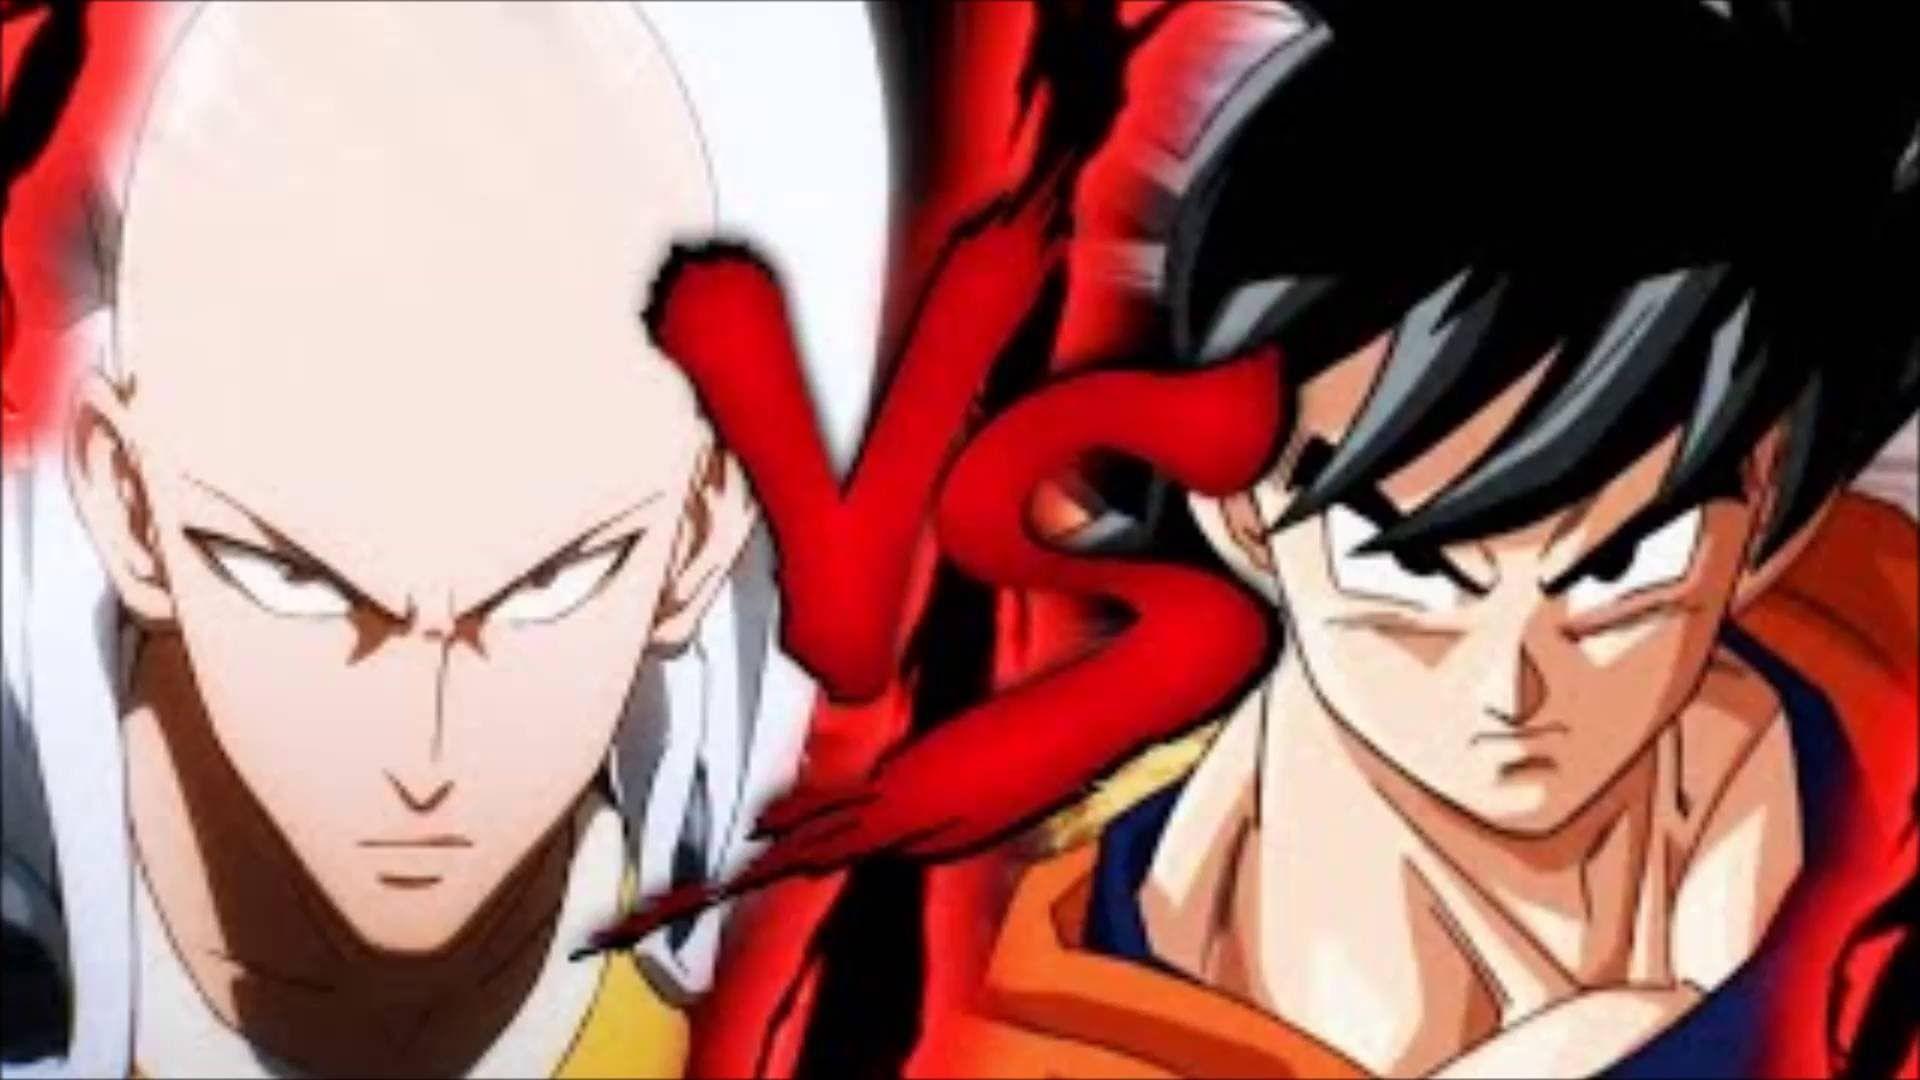 Goku vs Saitama (One Punch Man ) who would win?!